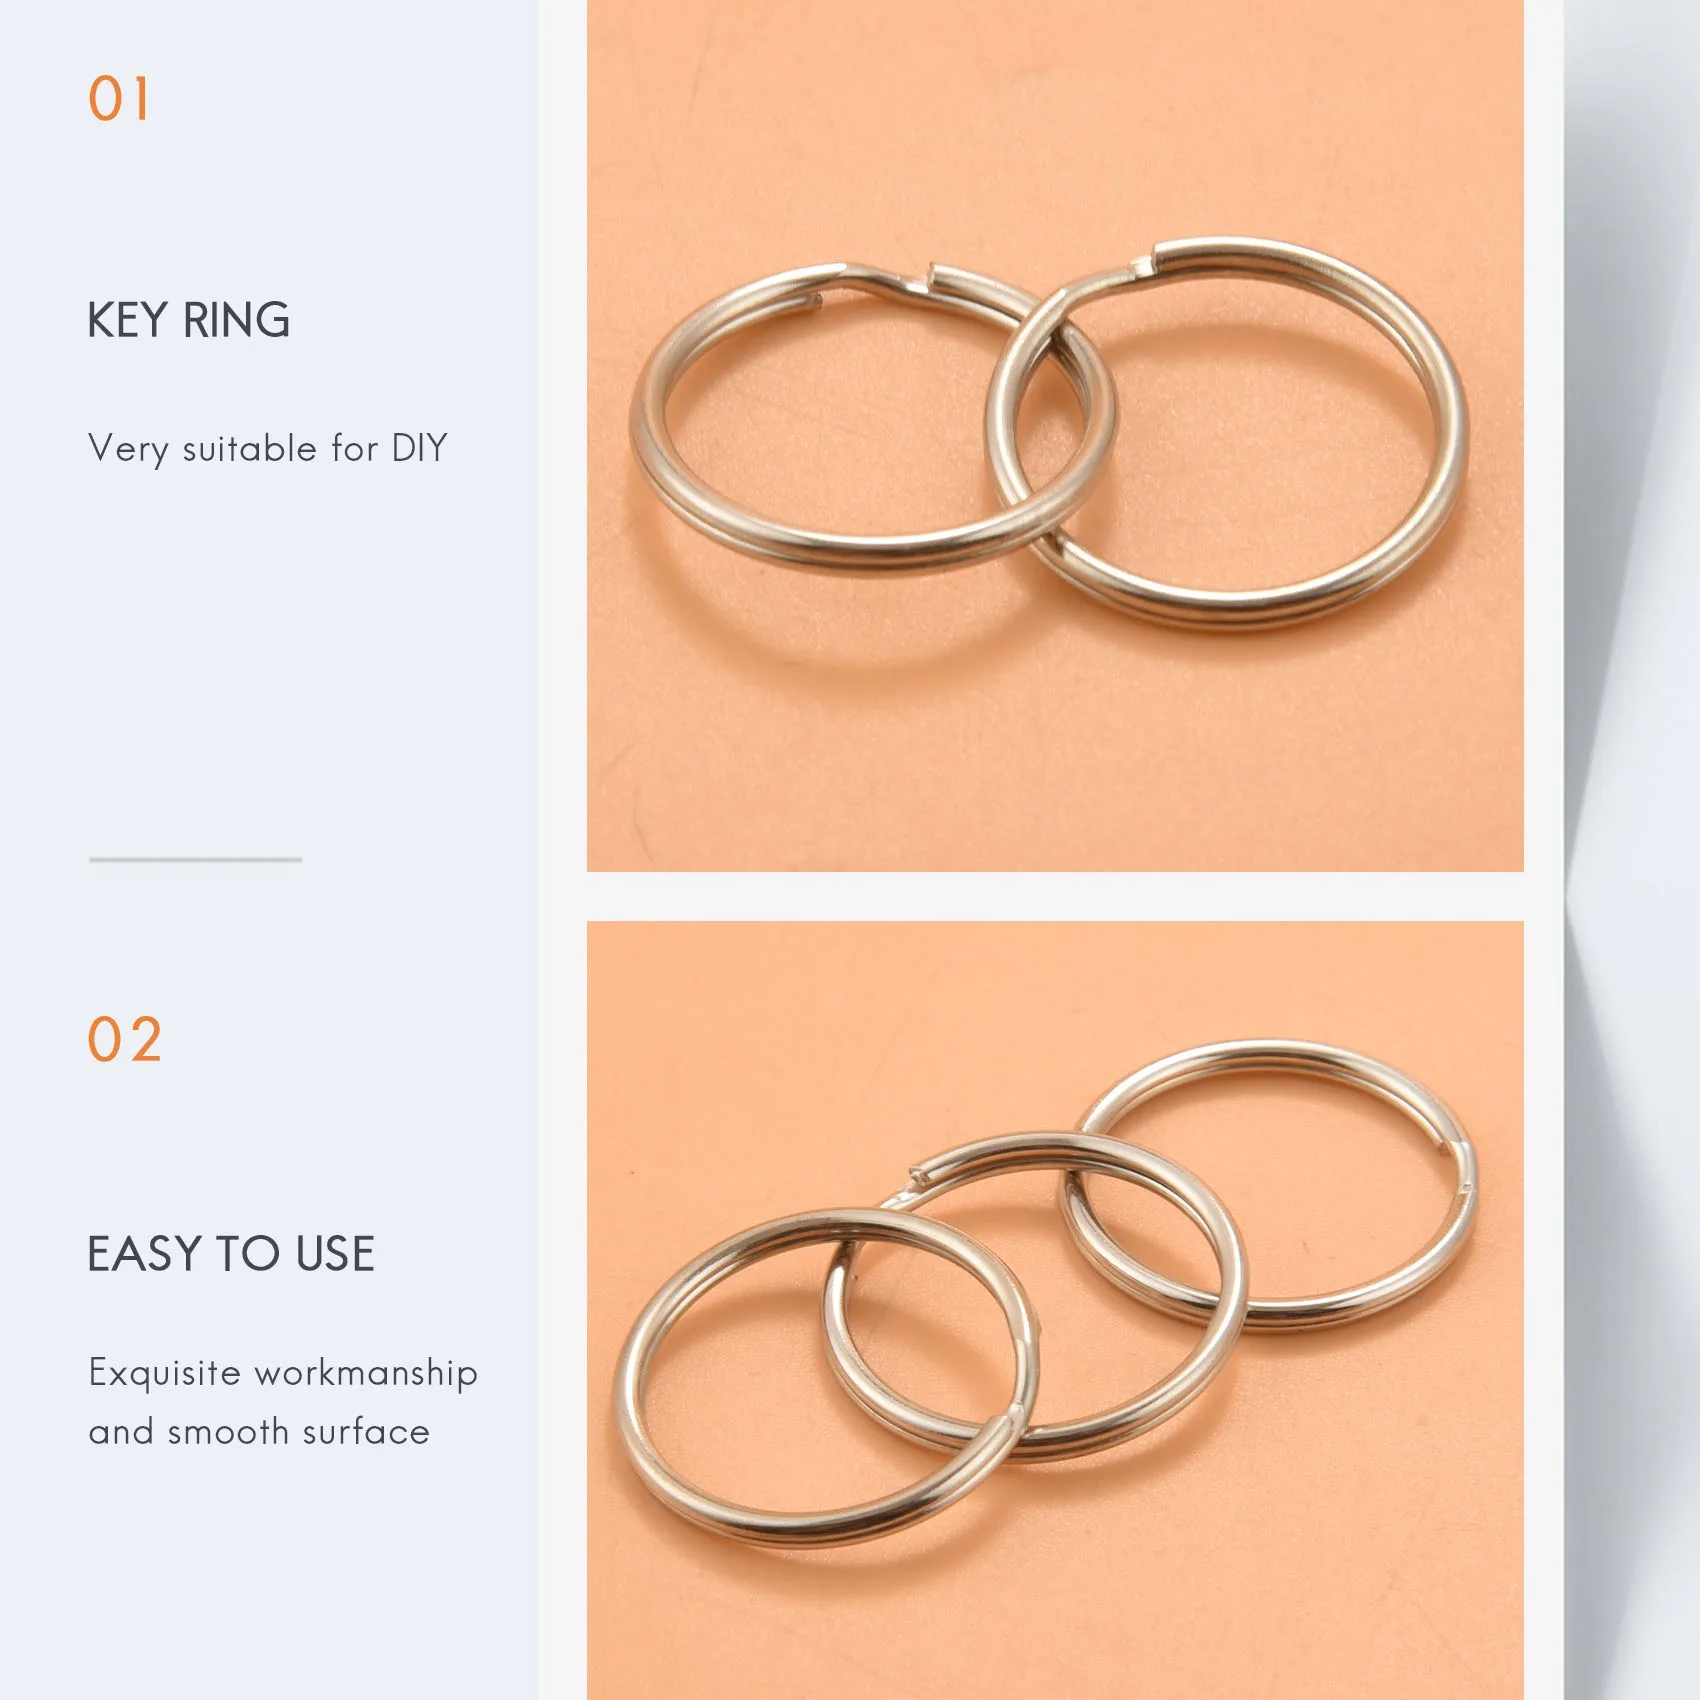 Кольцо для ключей 100ШТ, 1 дюйм, Открытое кольцо для ключей, Металлическое кольцо для ключей, Плоское кольцо для домашнего автомобильного брелка